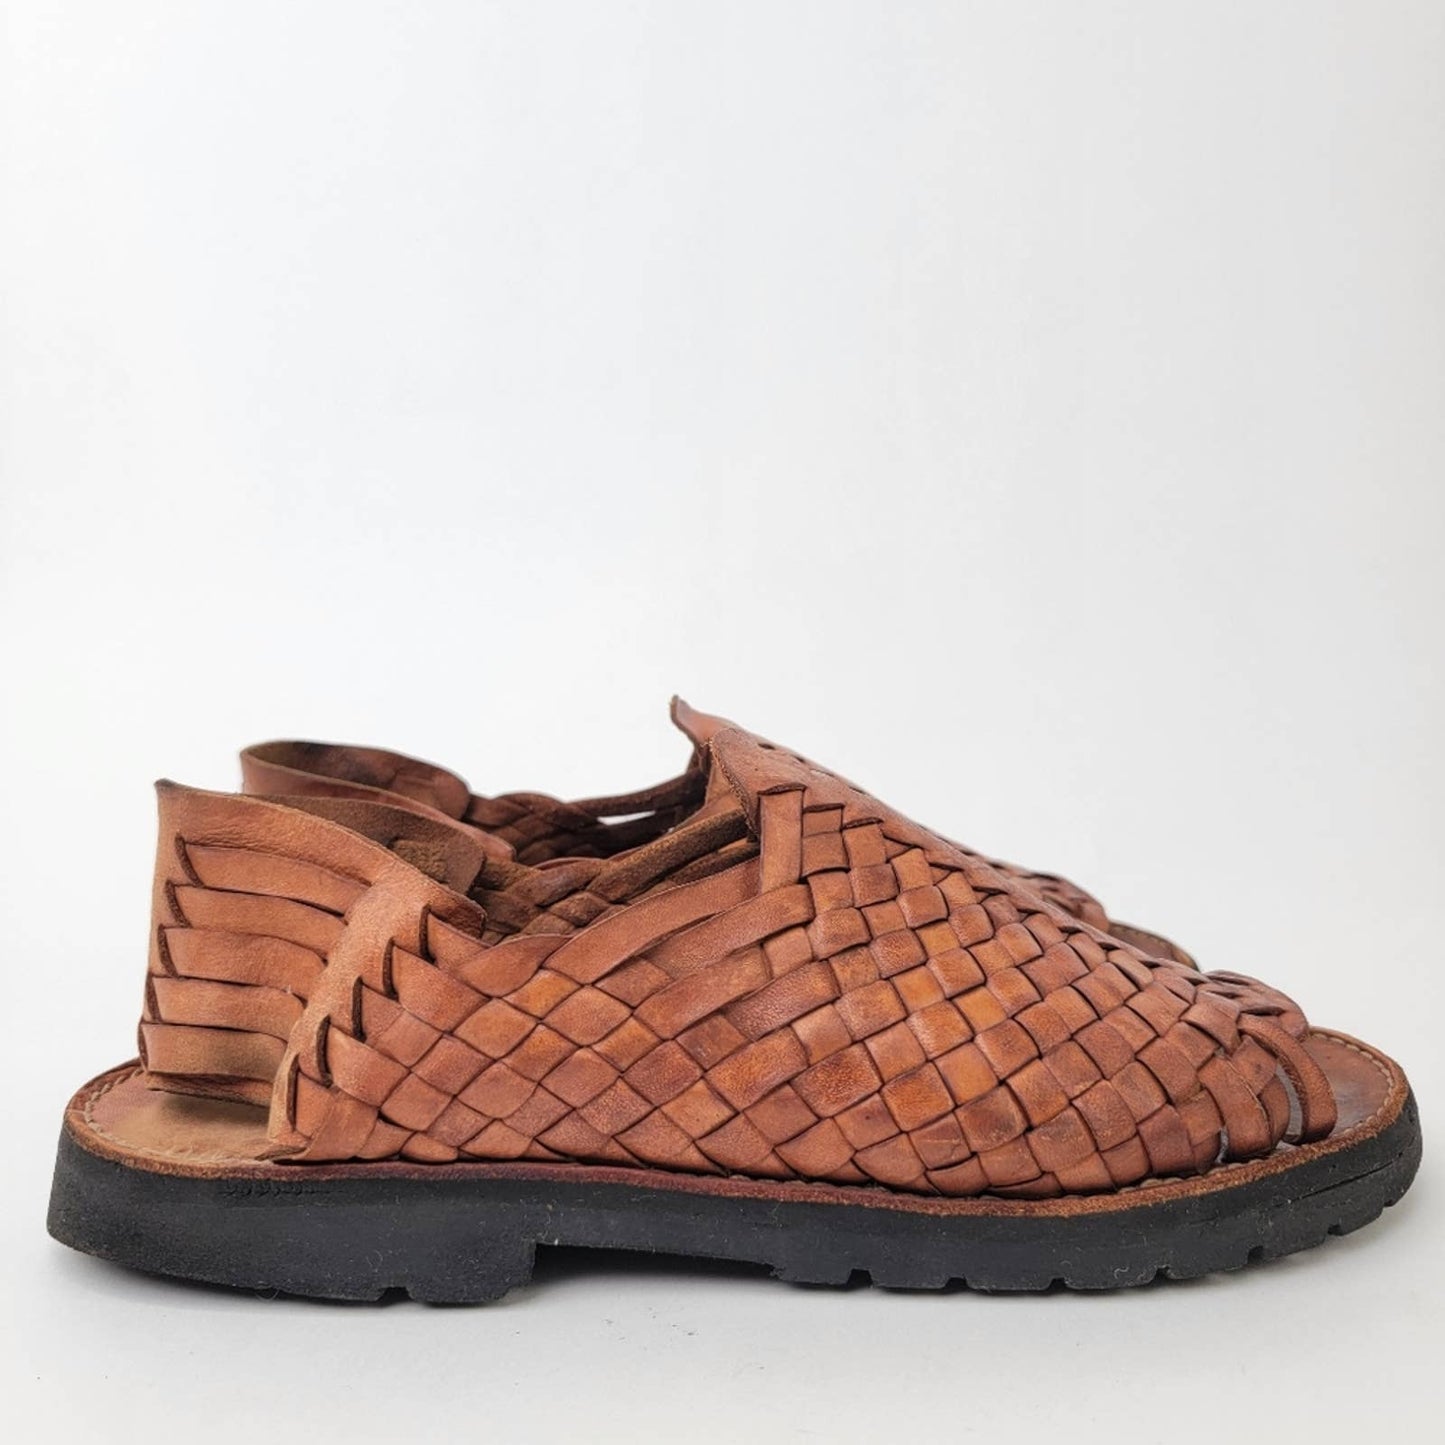 Brand X Ranchero Huarache Leather Fisherman Sandals - 12